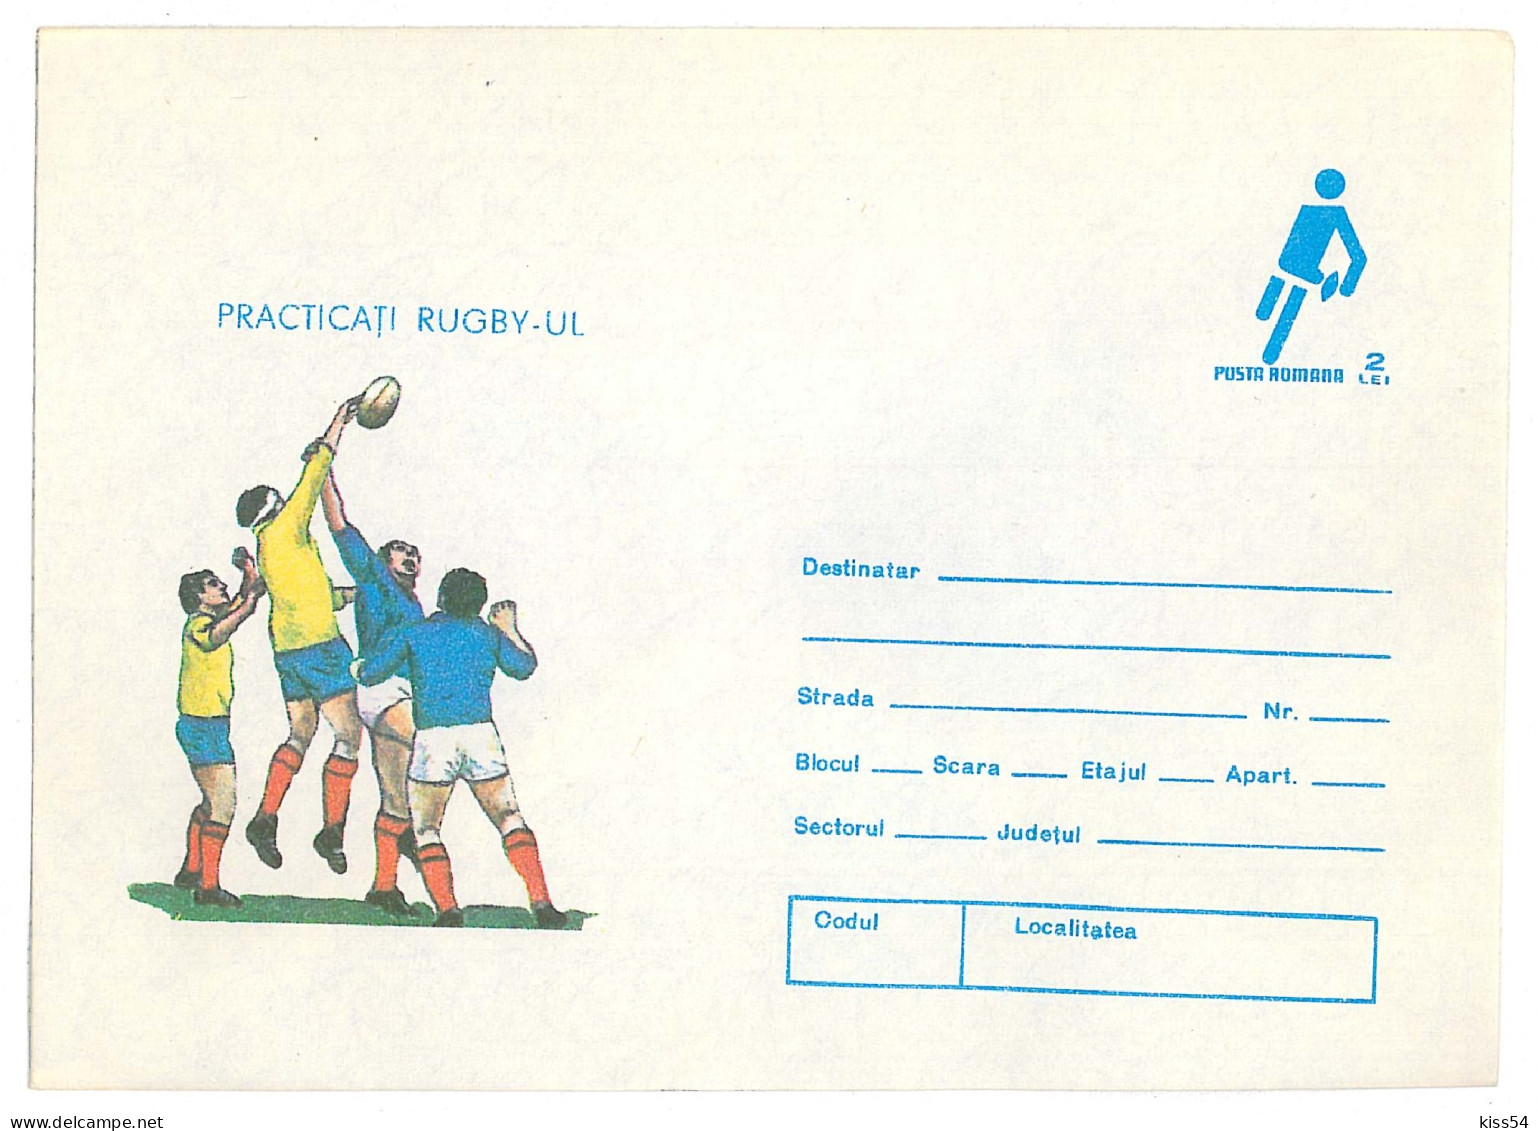 IP 82 - 265 RUGBY. - Stationery - Unused - 1982 - Rugby